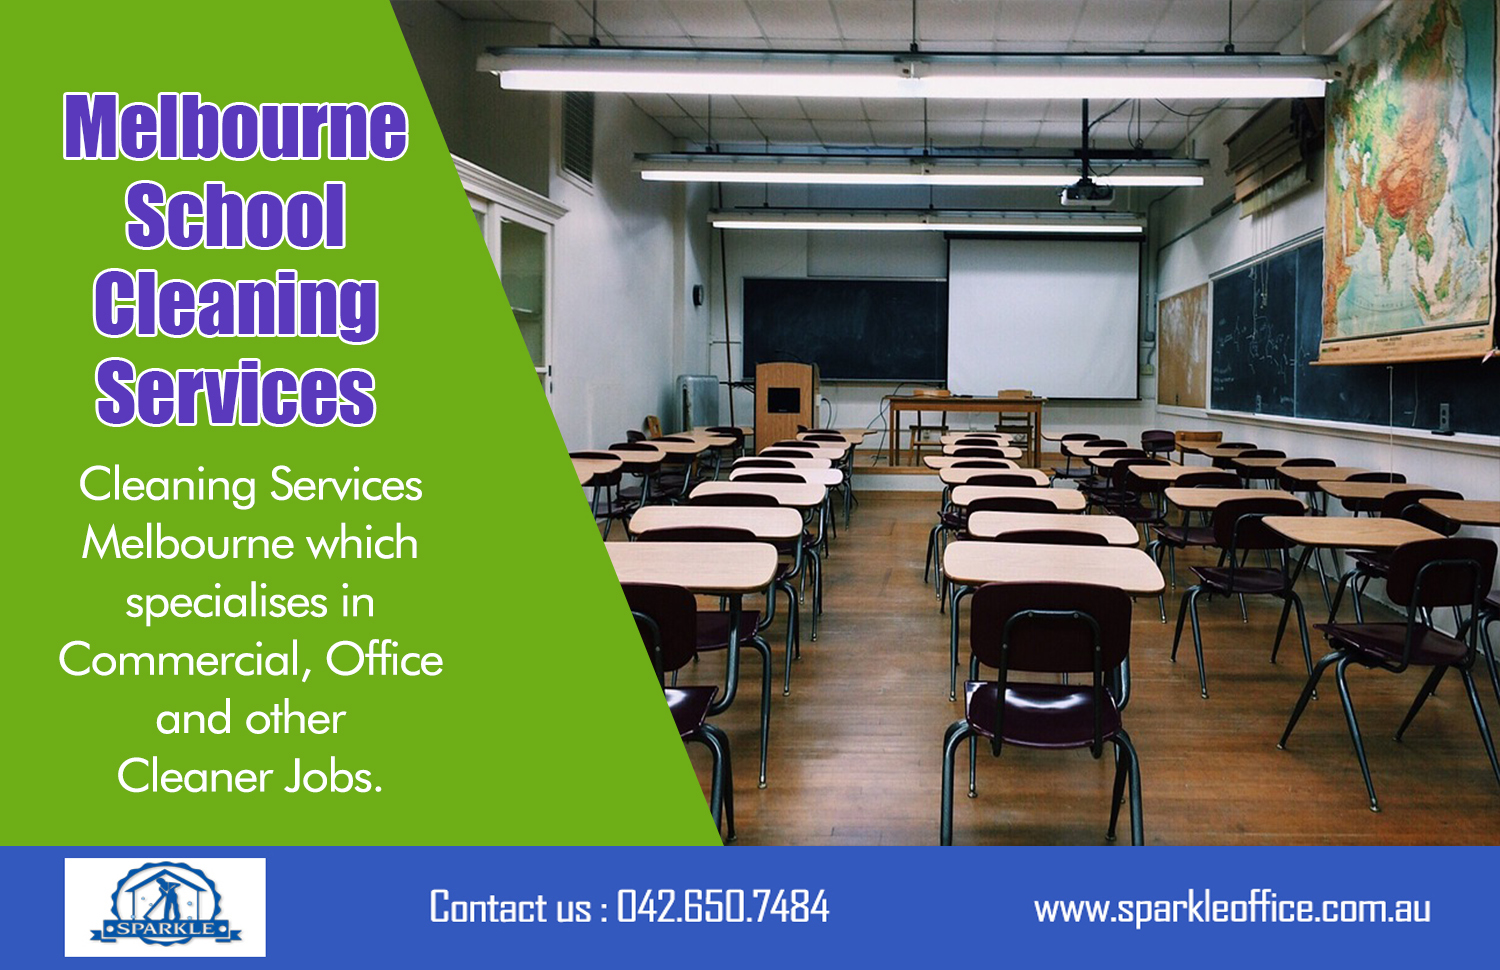 Melbourne School Cleaning Services| Call Us - 042 650 7484  | sparkleoffice.com.au